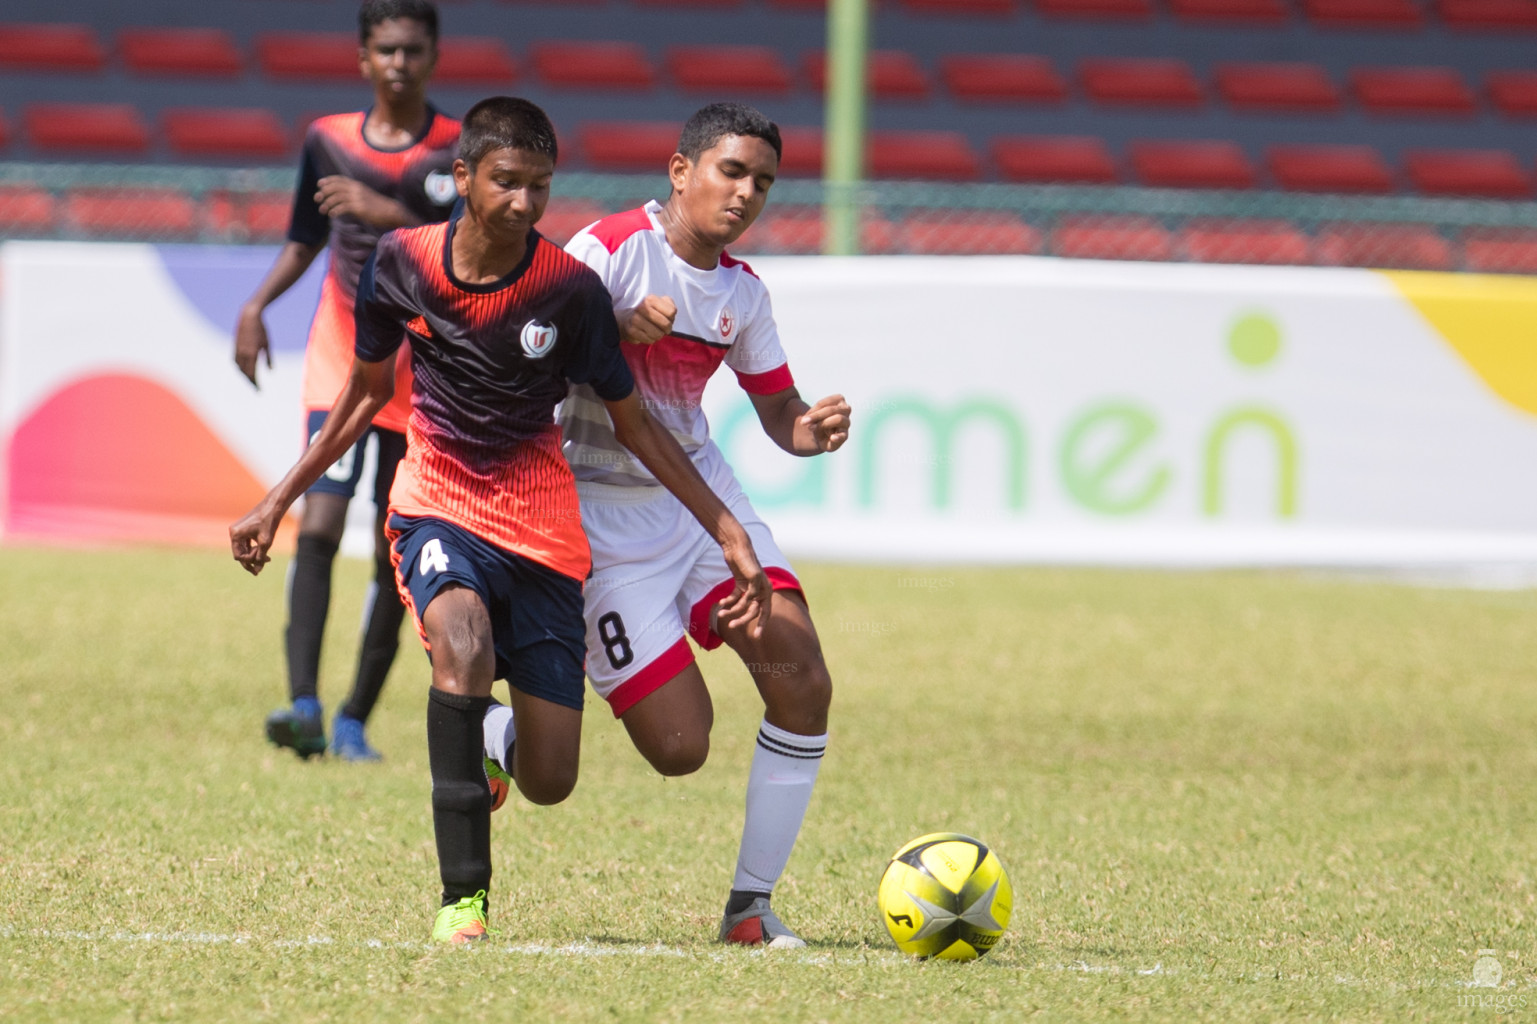 Iskandhar School vs Imaduddin School in Mamen Inter-School Football Tournament 2019 (U15) on 28th February 2019, Monday in Male' Maldives (Images.mv Photo: Suadh Abdul Sattar)